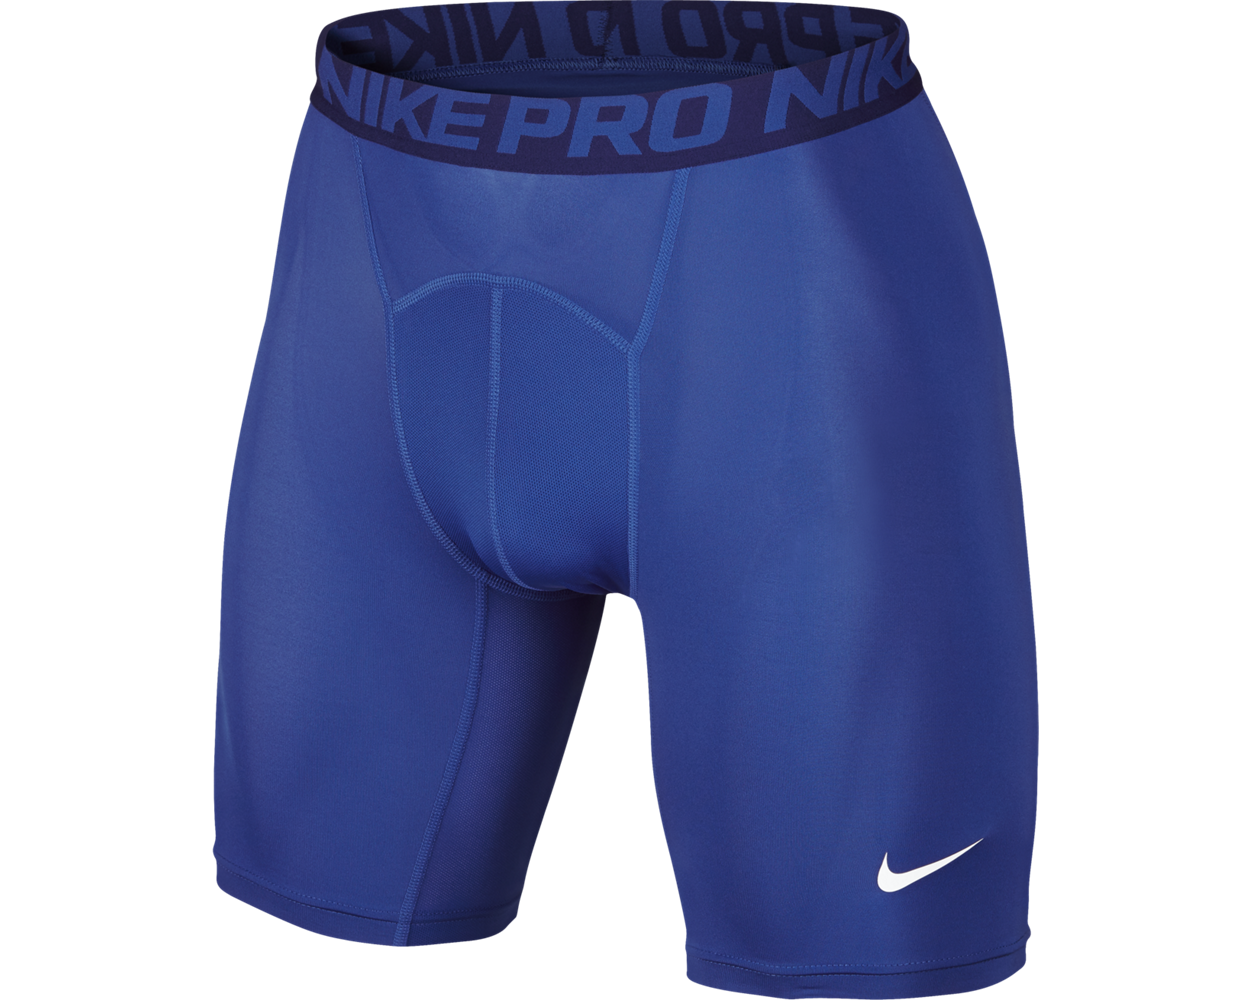 nike compression shorts blue